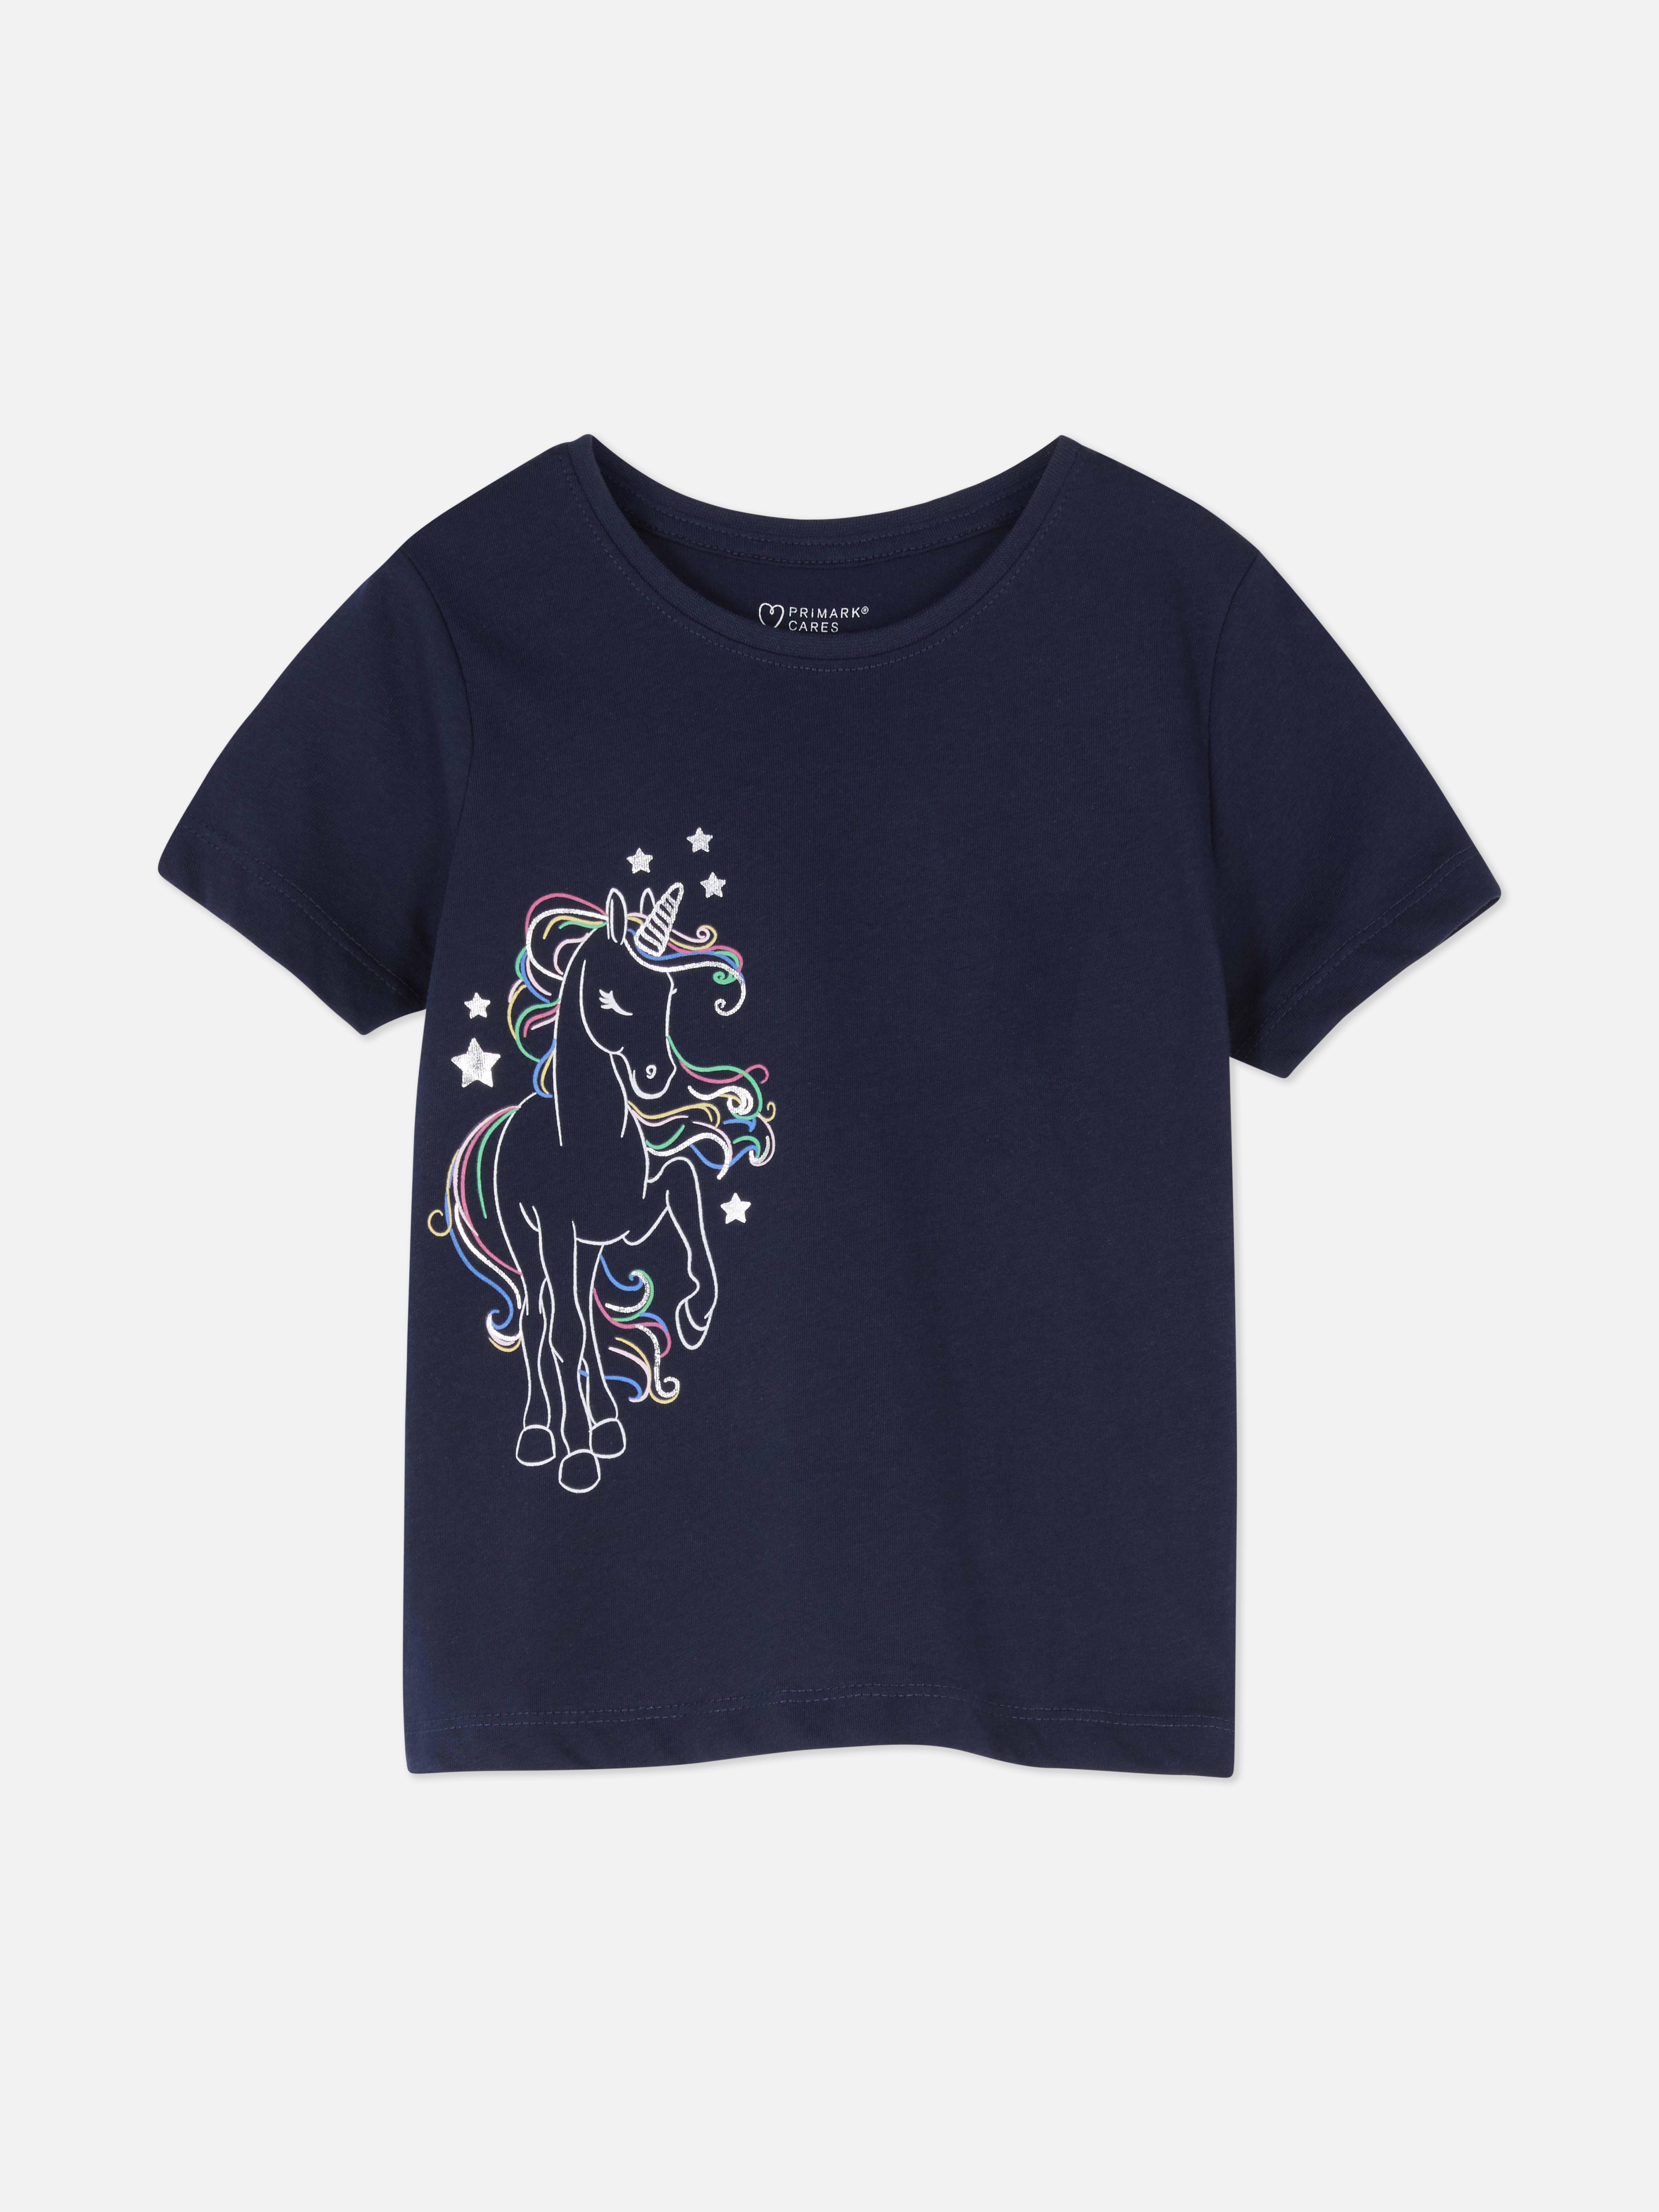 Unicorn Artwork T-shirt